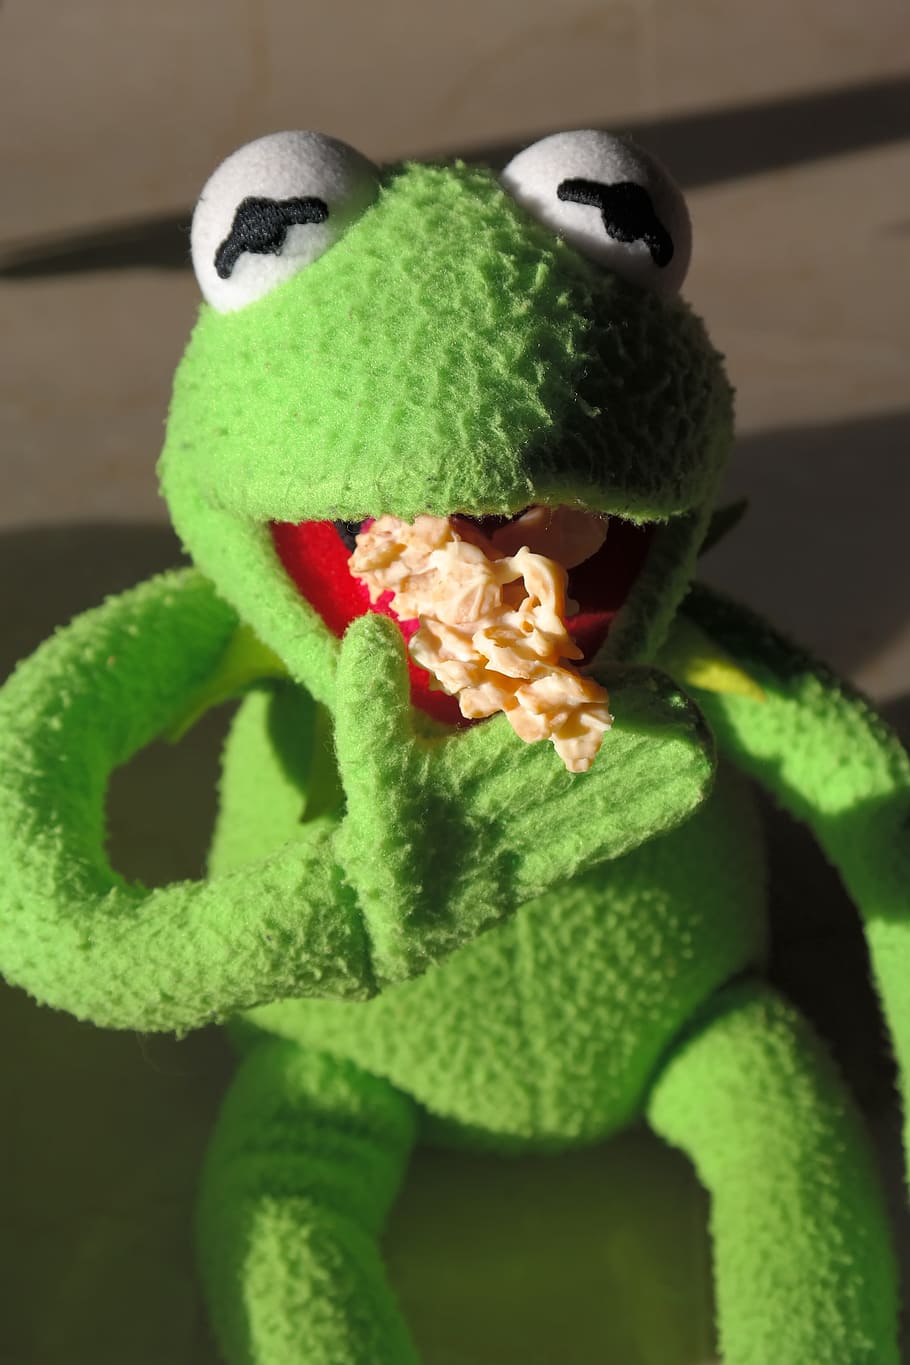 kermit the frog small plush toy